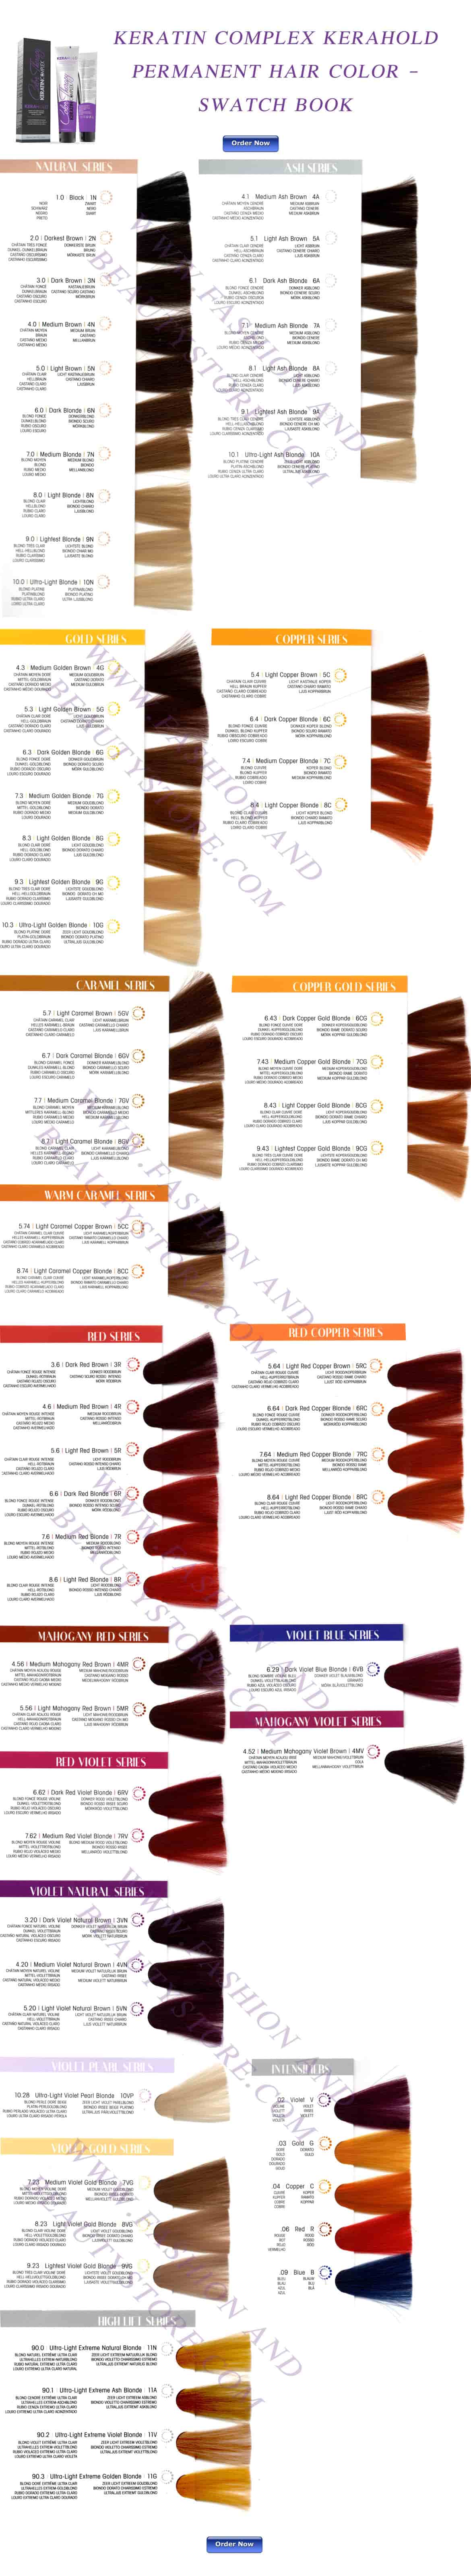 Keratin Complex Kerahold Hair Color Chart 